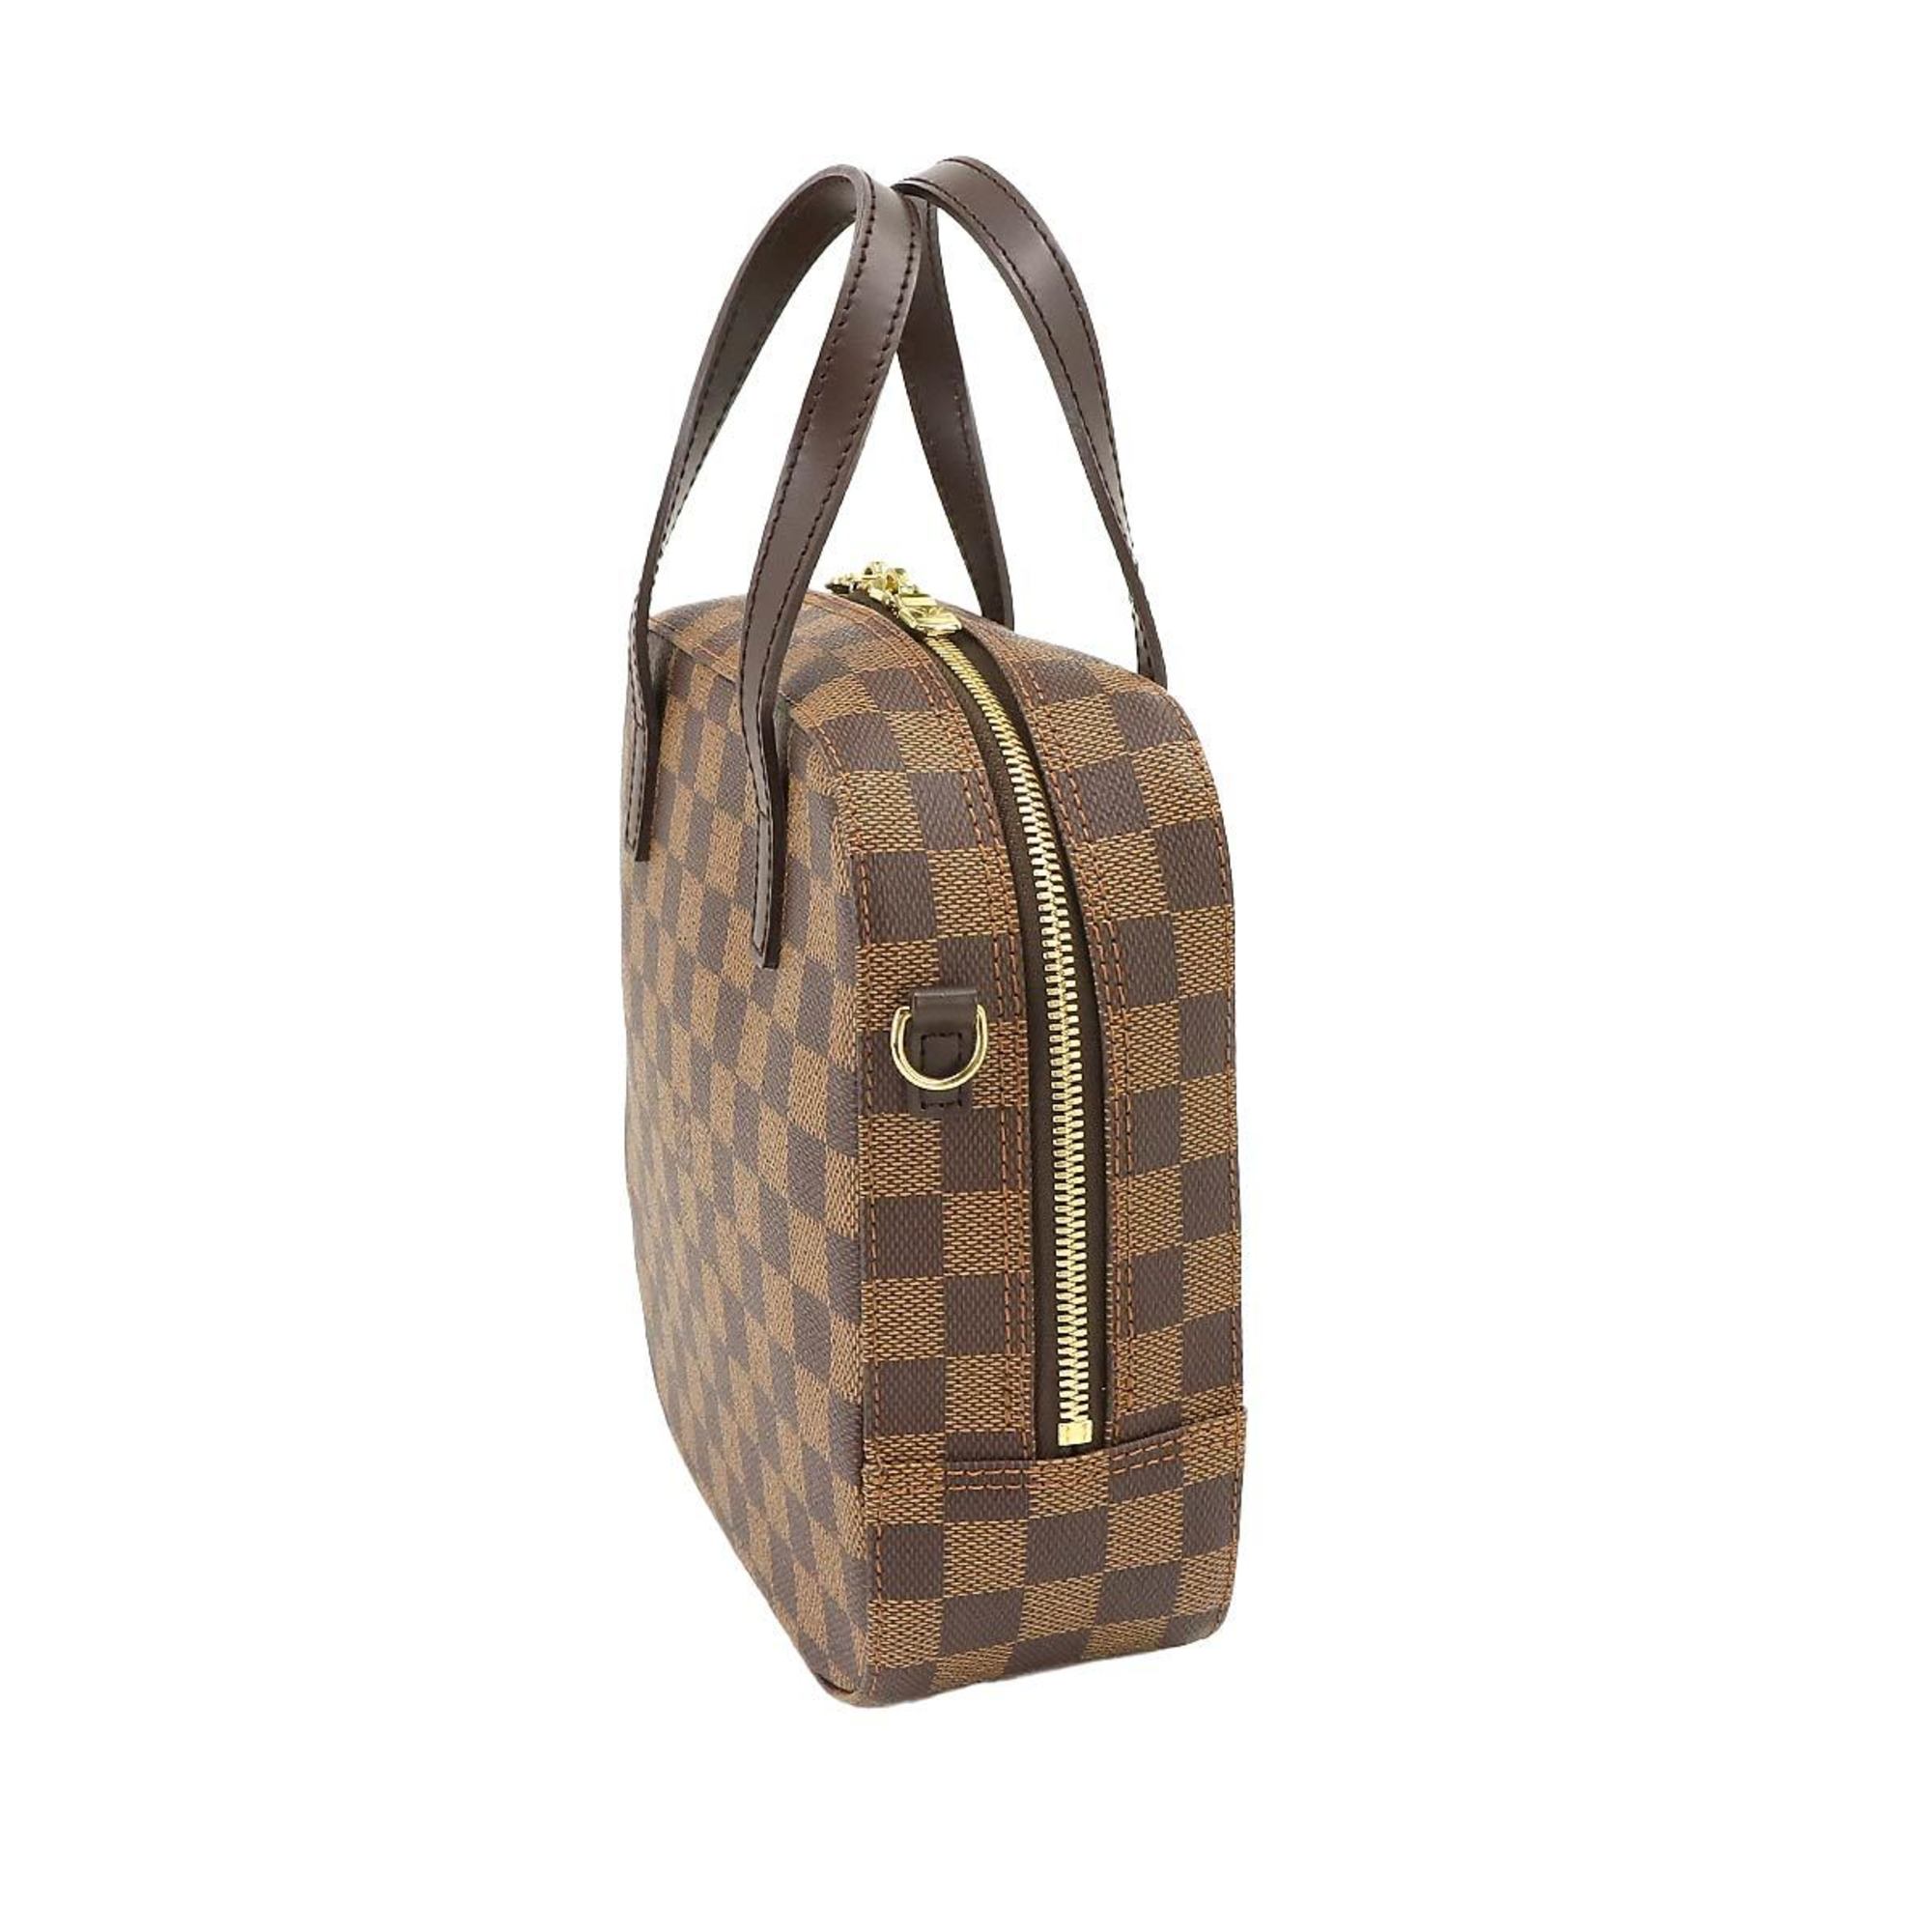 Louis Vuitton Damier Spontini SPO 2way Hand Shoulder Bag Ebene N48021